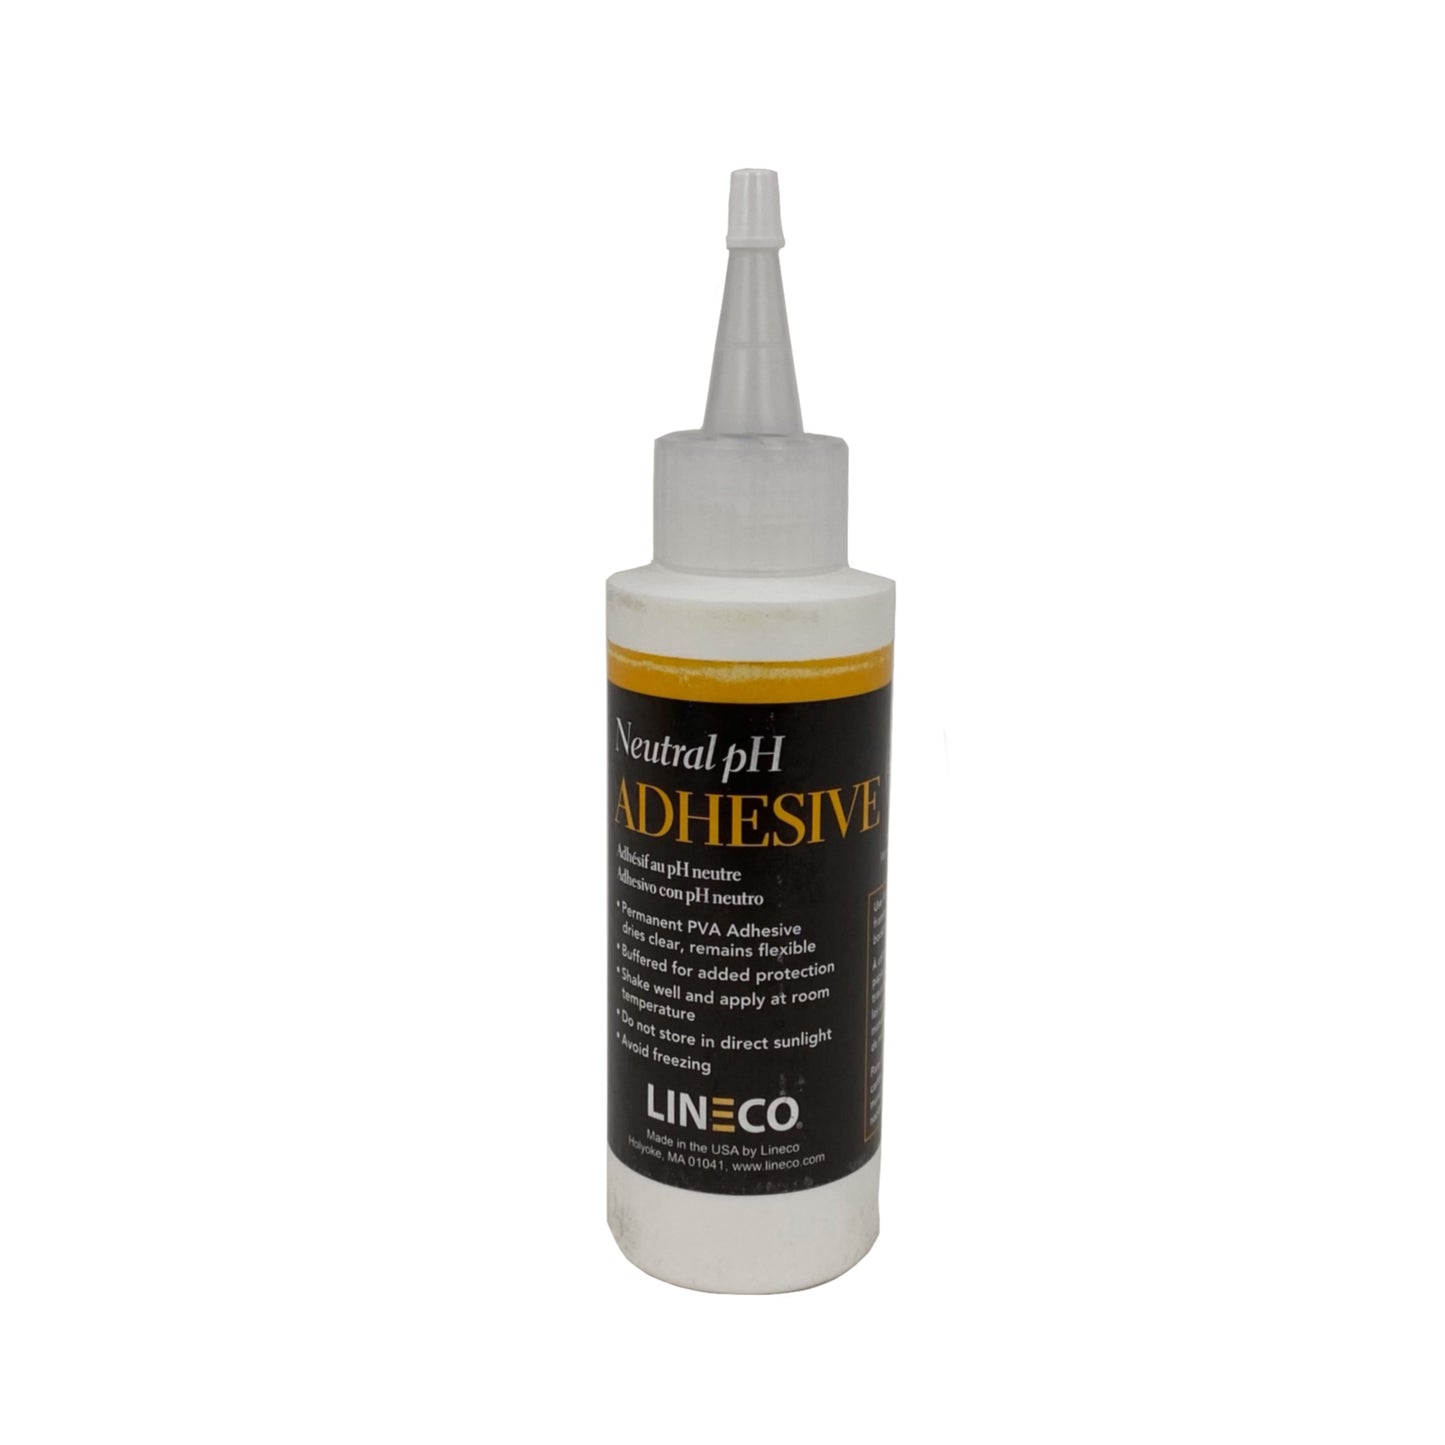 Lineco White Neutral pH Adhesive / PVA Glue - 4 oz. by Lineco - K. A. Artist Shop